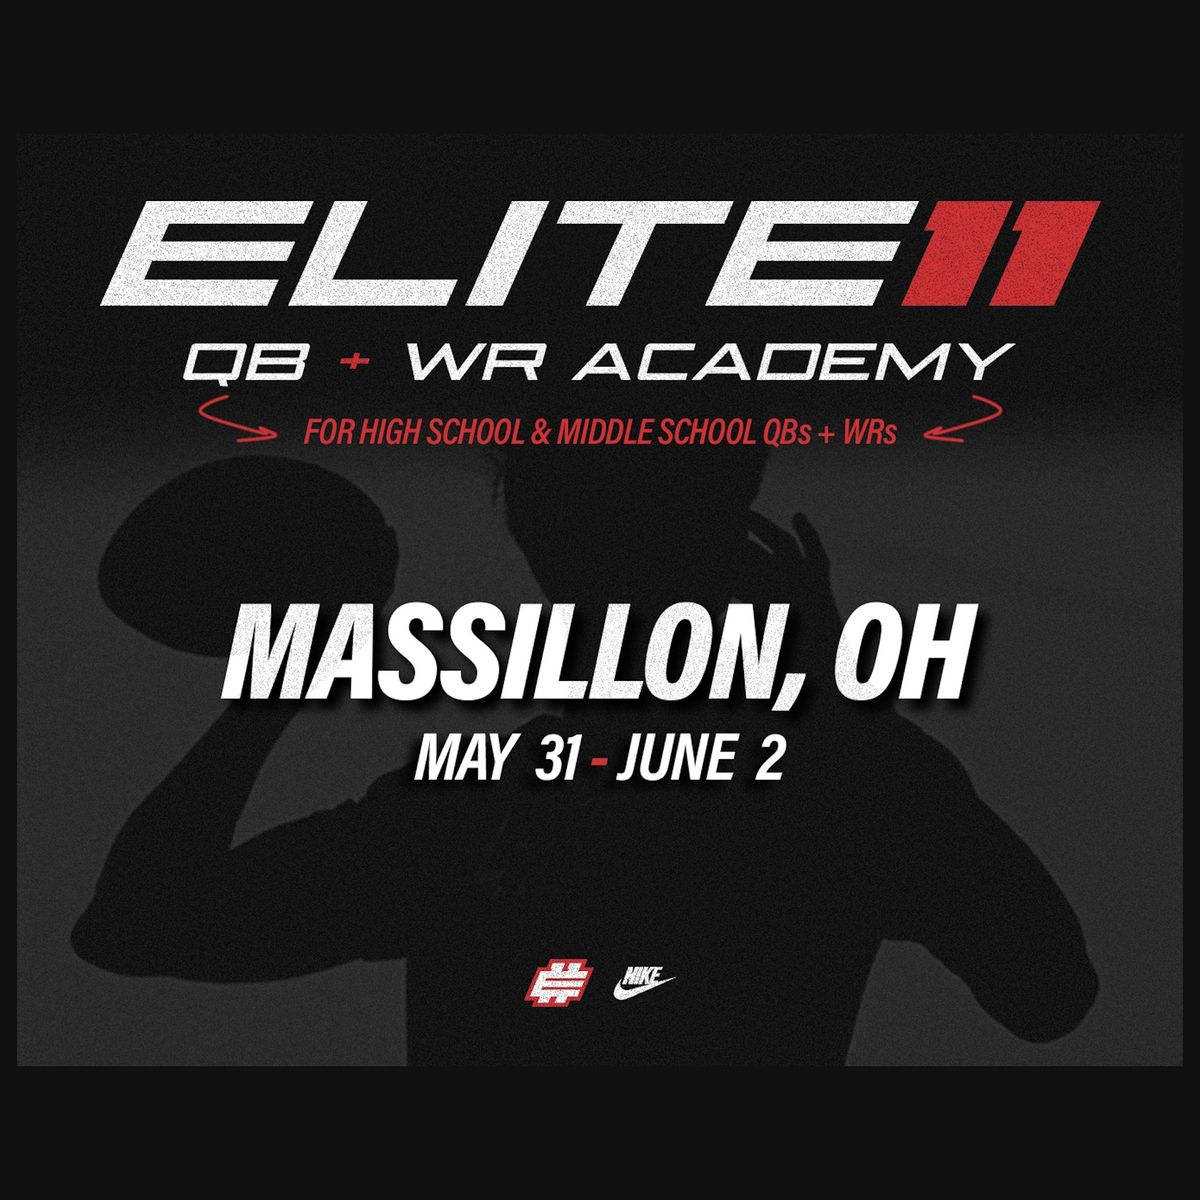 Elite 11 Academy - Massillon, OH